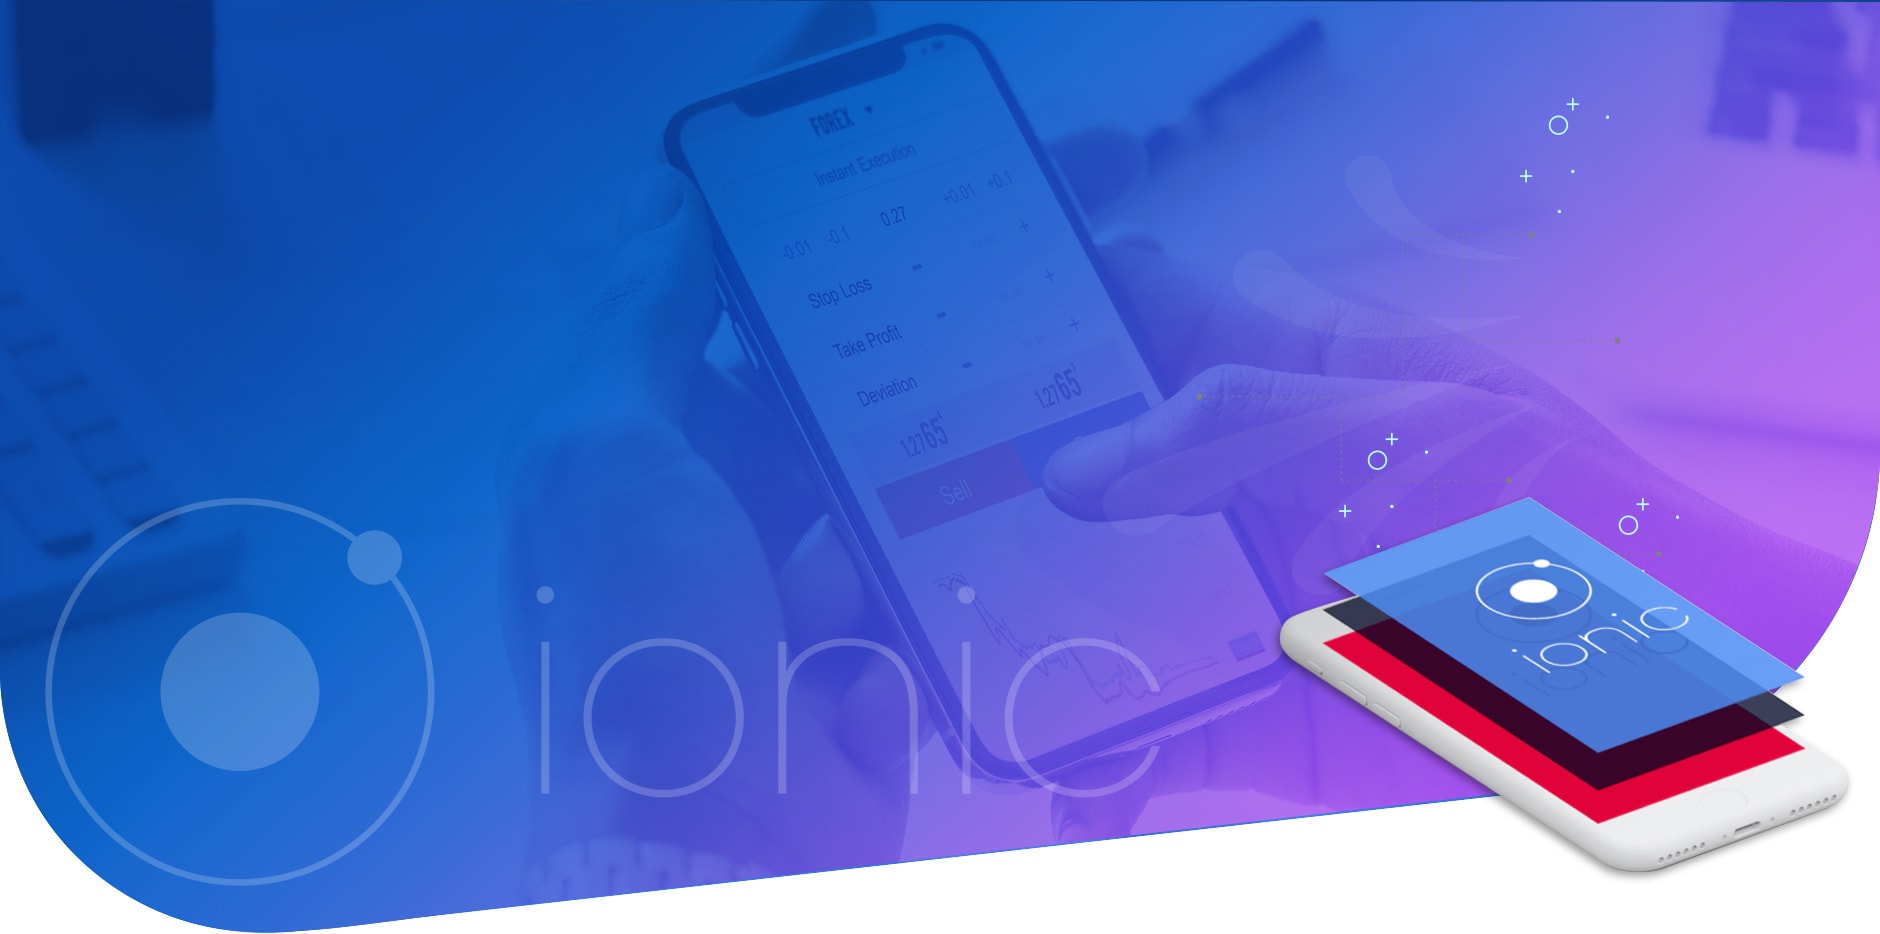 Ionic App Development Services